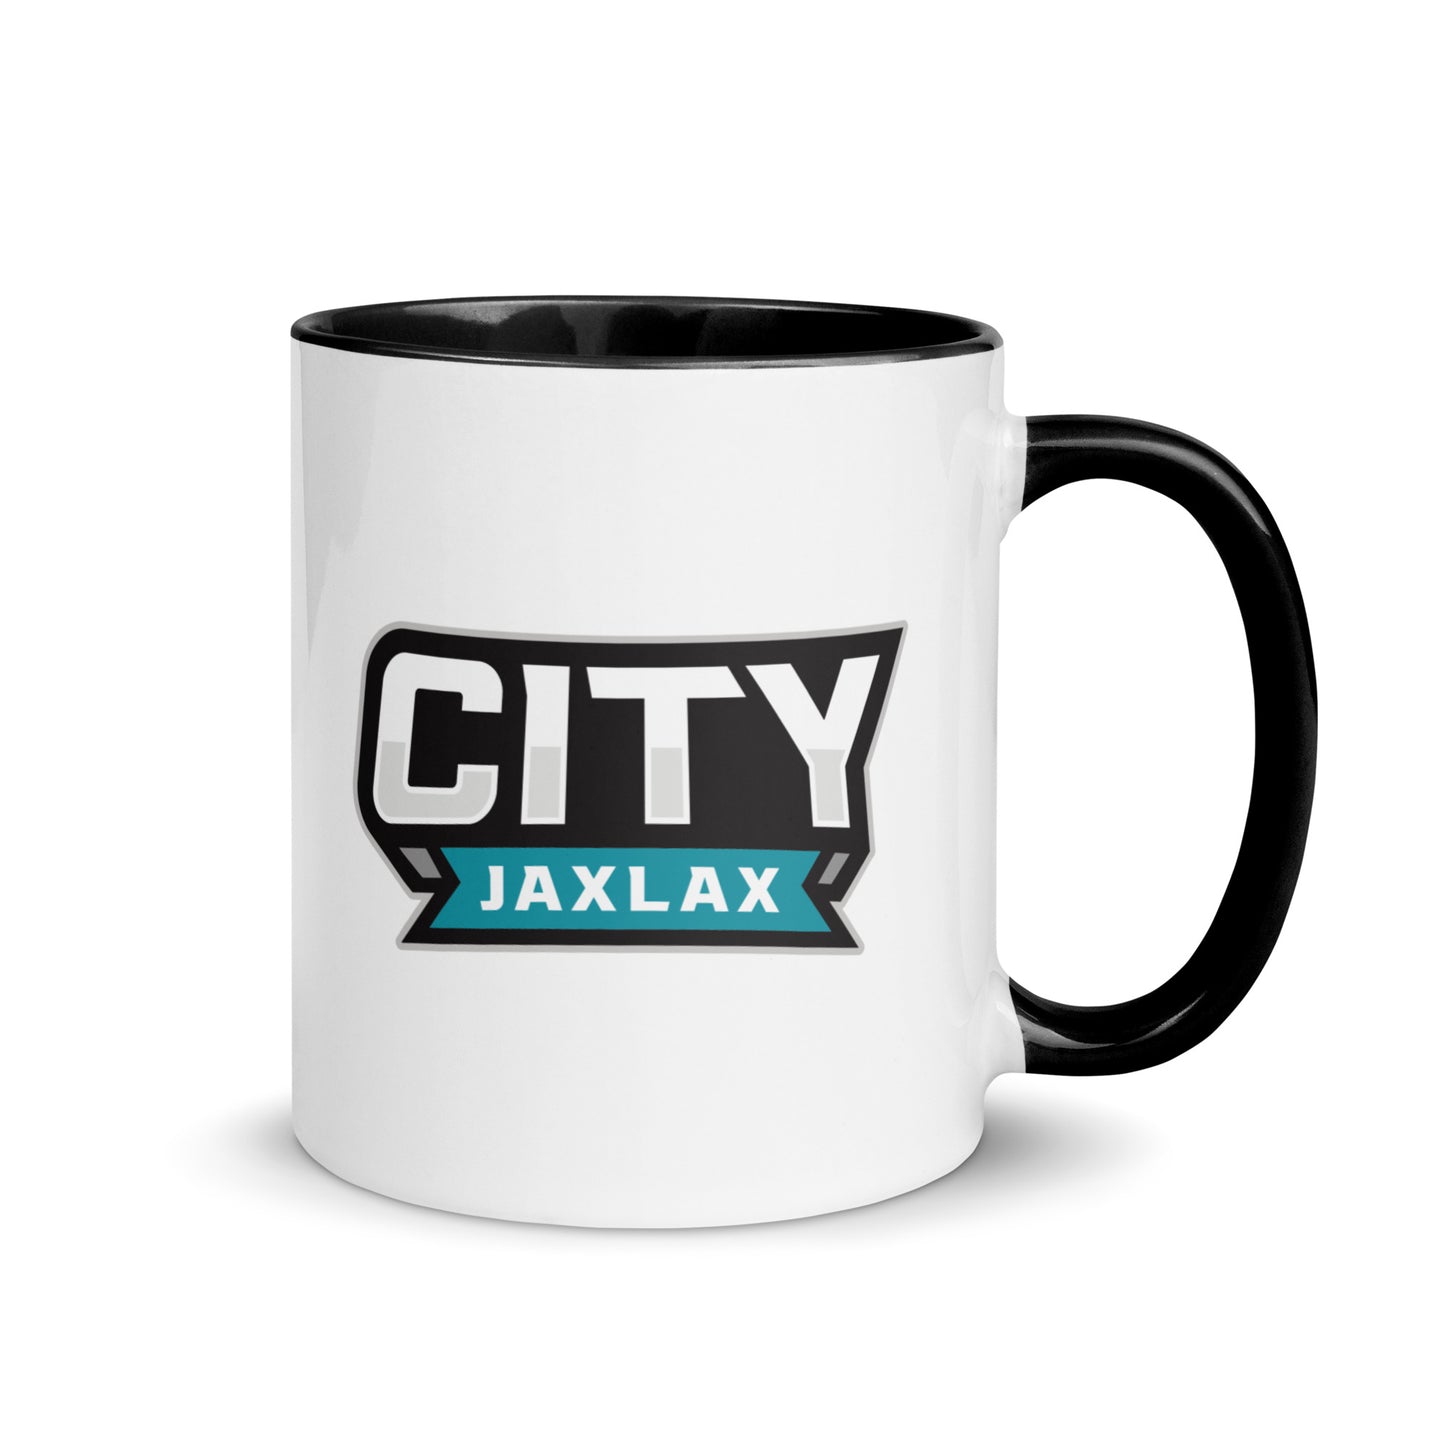 Jax Lax City - Mug with Color Inside